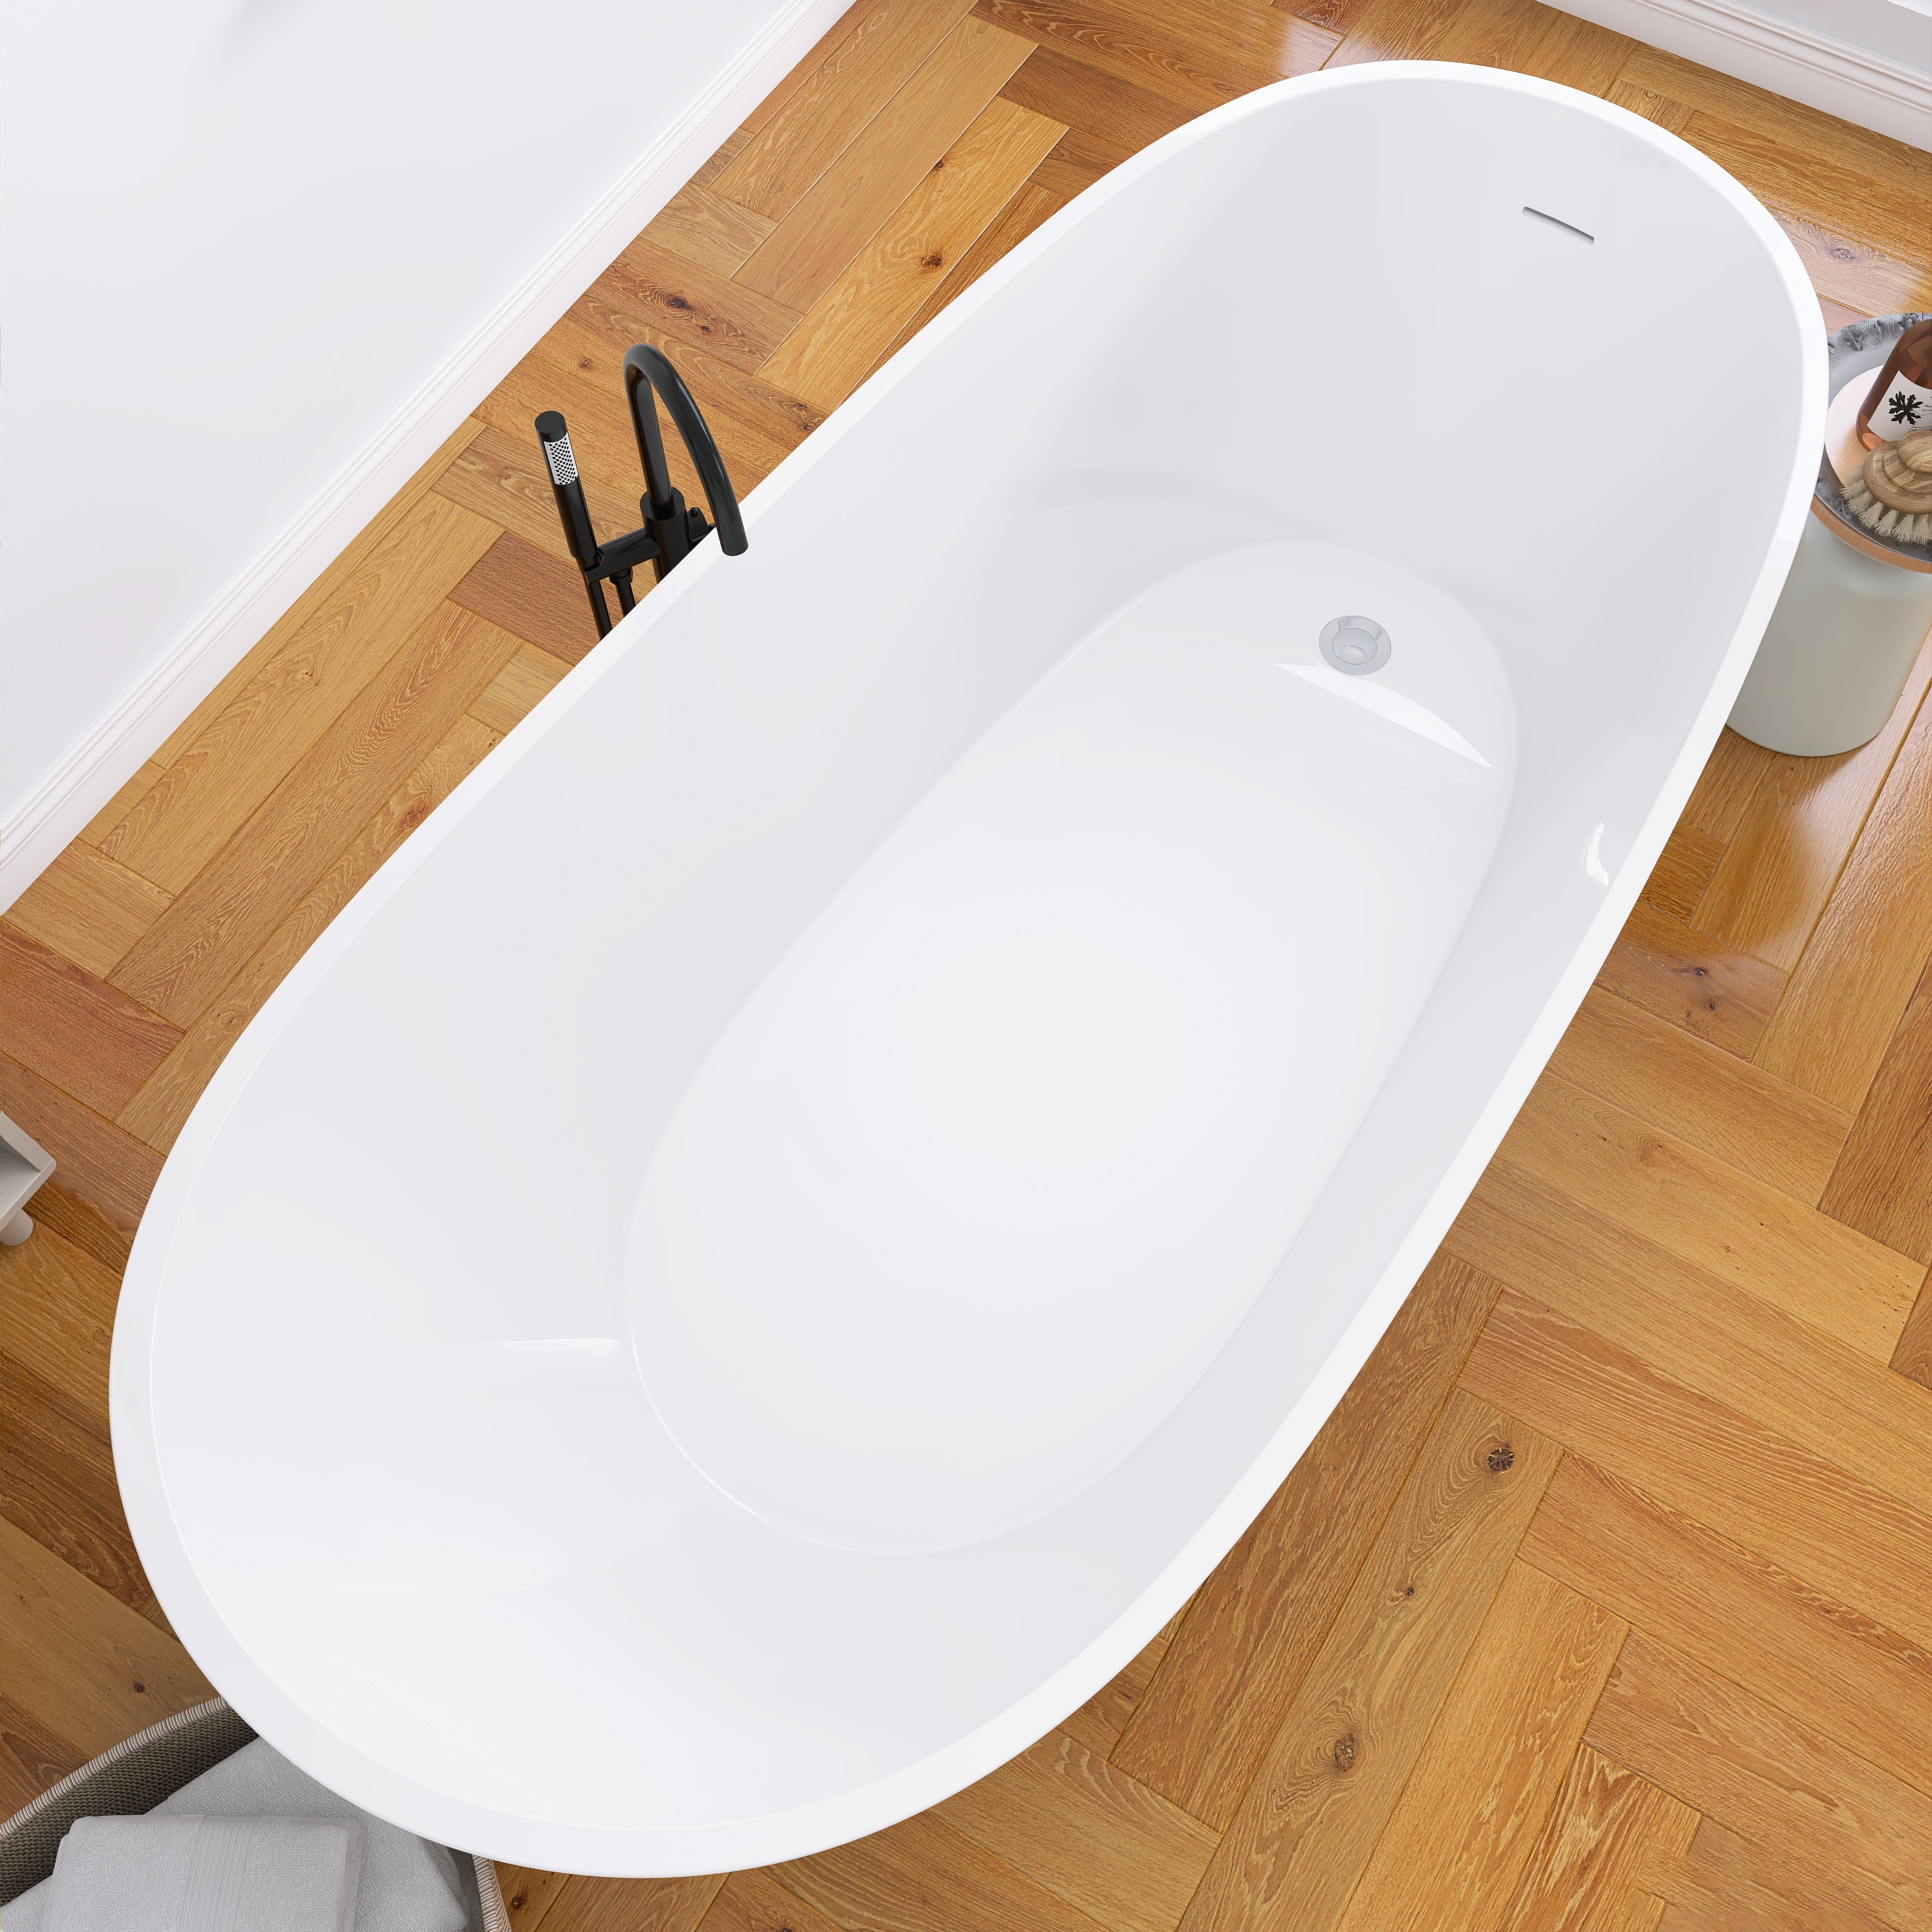 ZNTS 67" Acrylic Free Standing Tub - Classic Oval Shape Soaking Tub, Adjustable Freestanding Bathtub with W99565928